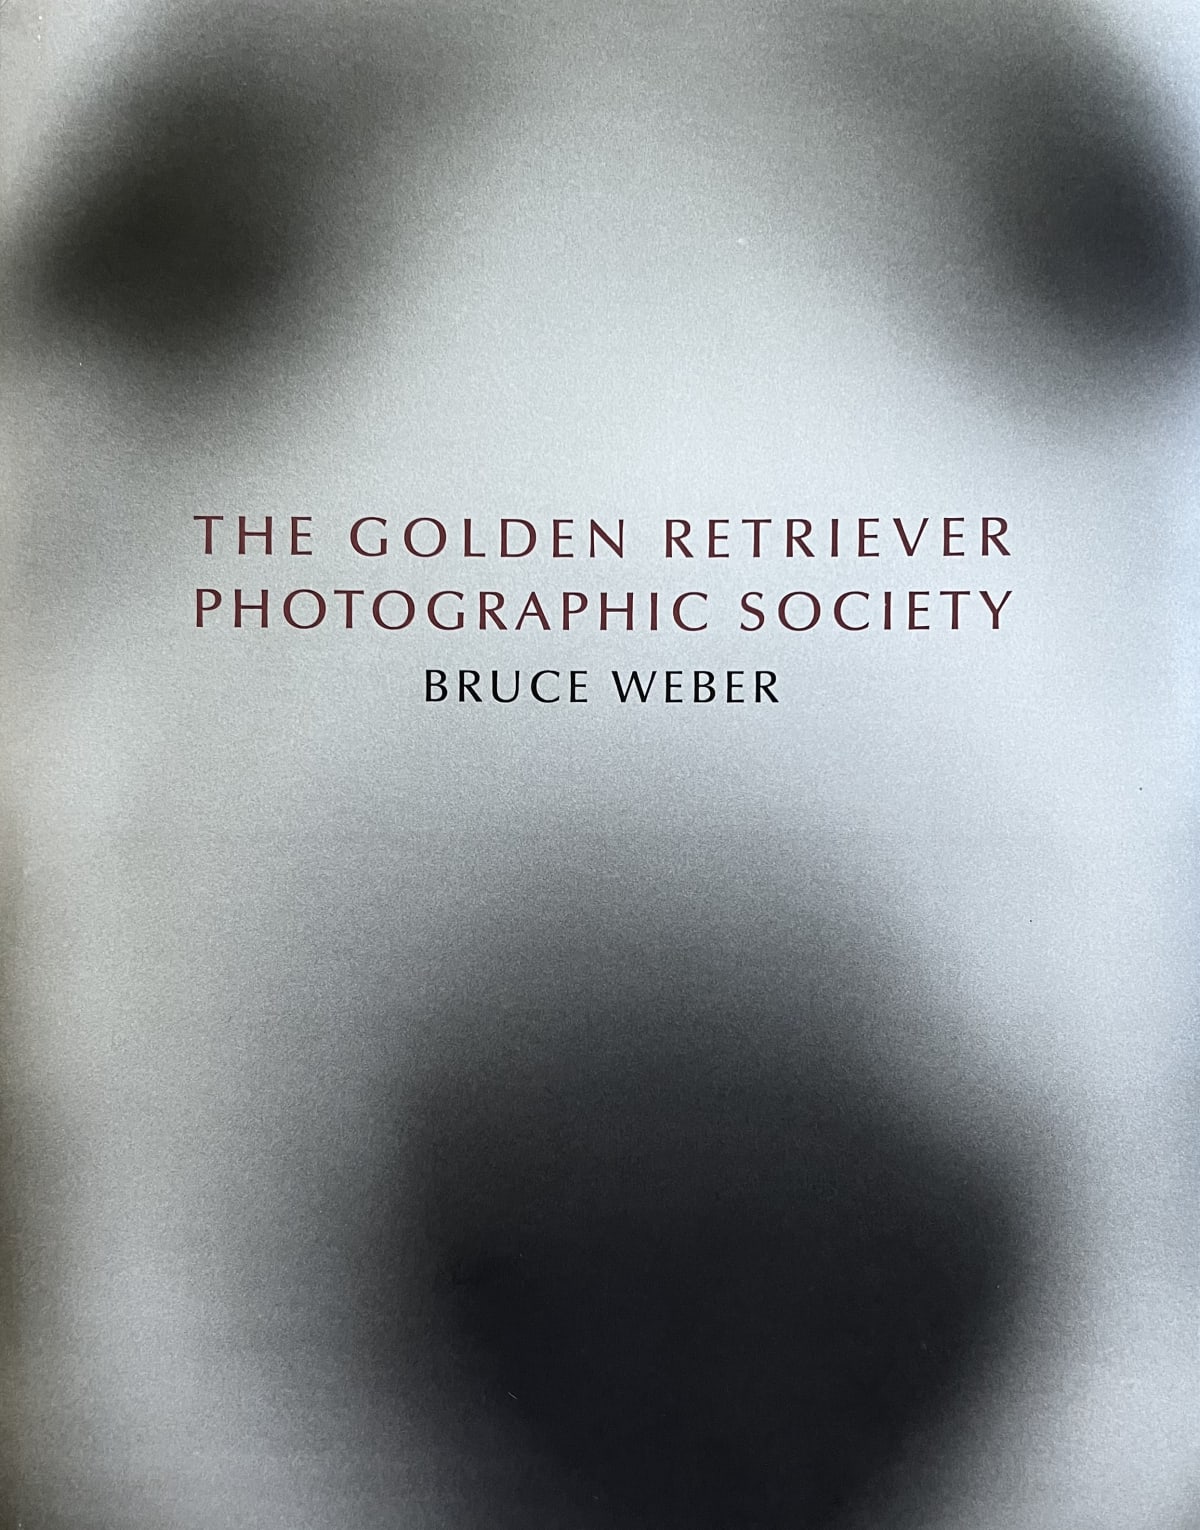 The Golden Retriever Photographic Society